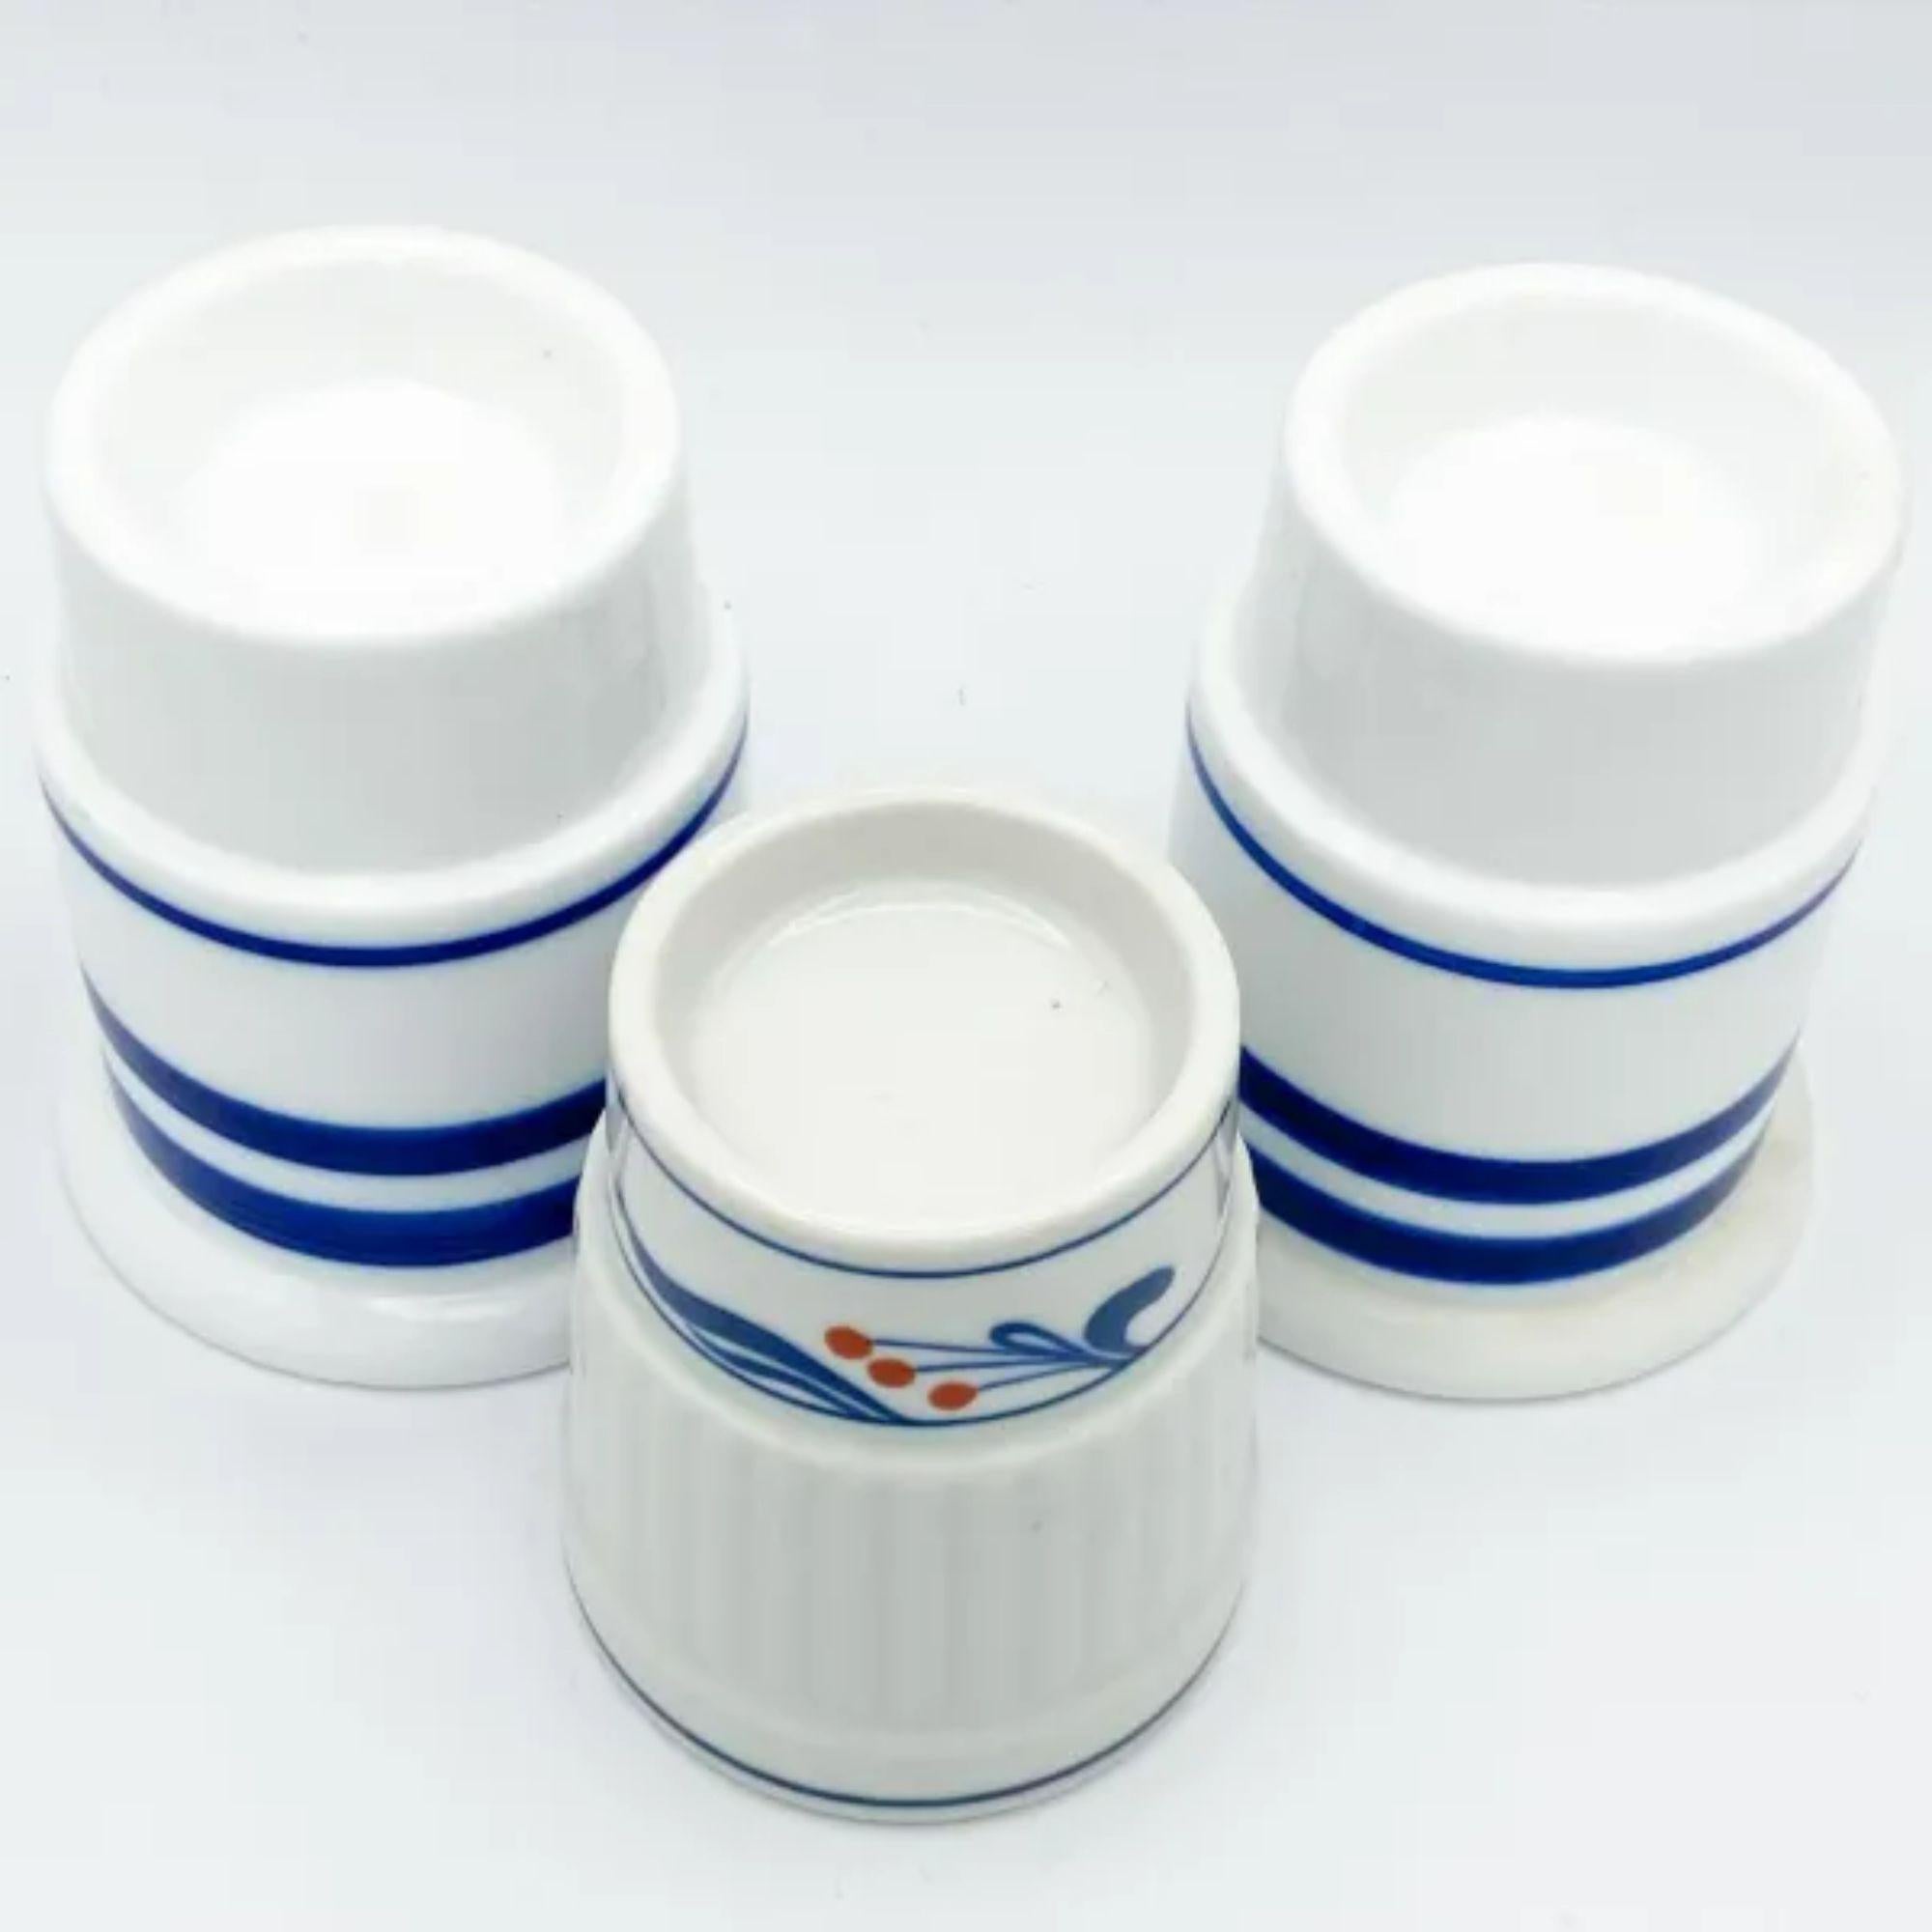 Elegant set of 3 porcelain candle holders by Dansk.

Additional information: 
Material: Porcelain
Color: White
Style: Mid-Century Modern
Brand: Dansk
Time Period: 1960s
Place of origin: Japan
Dimension:
Large: 3.25